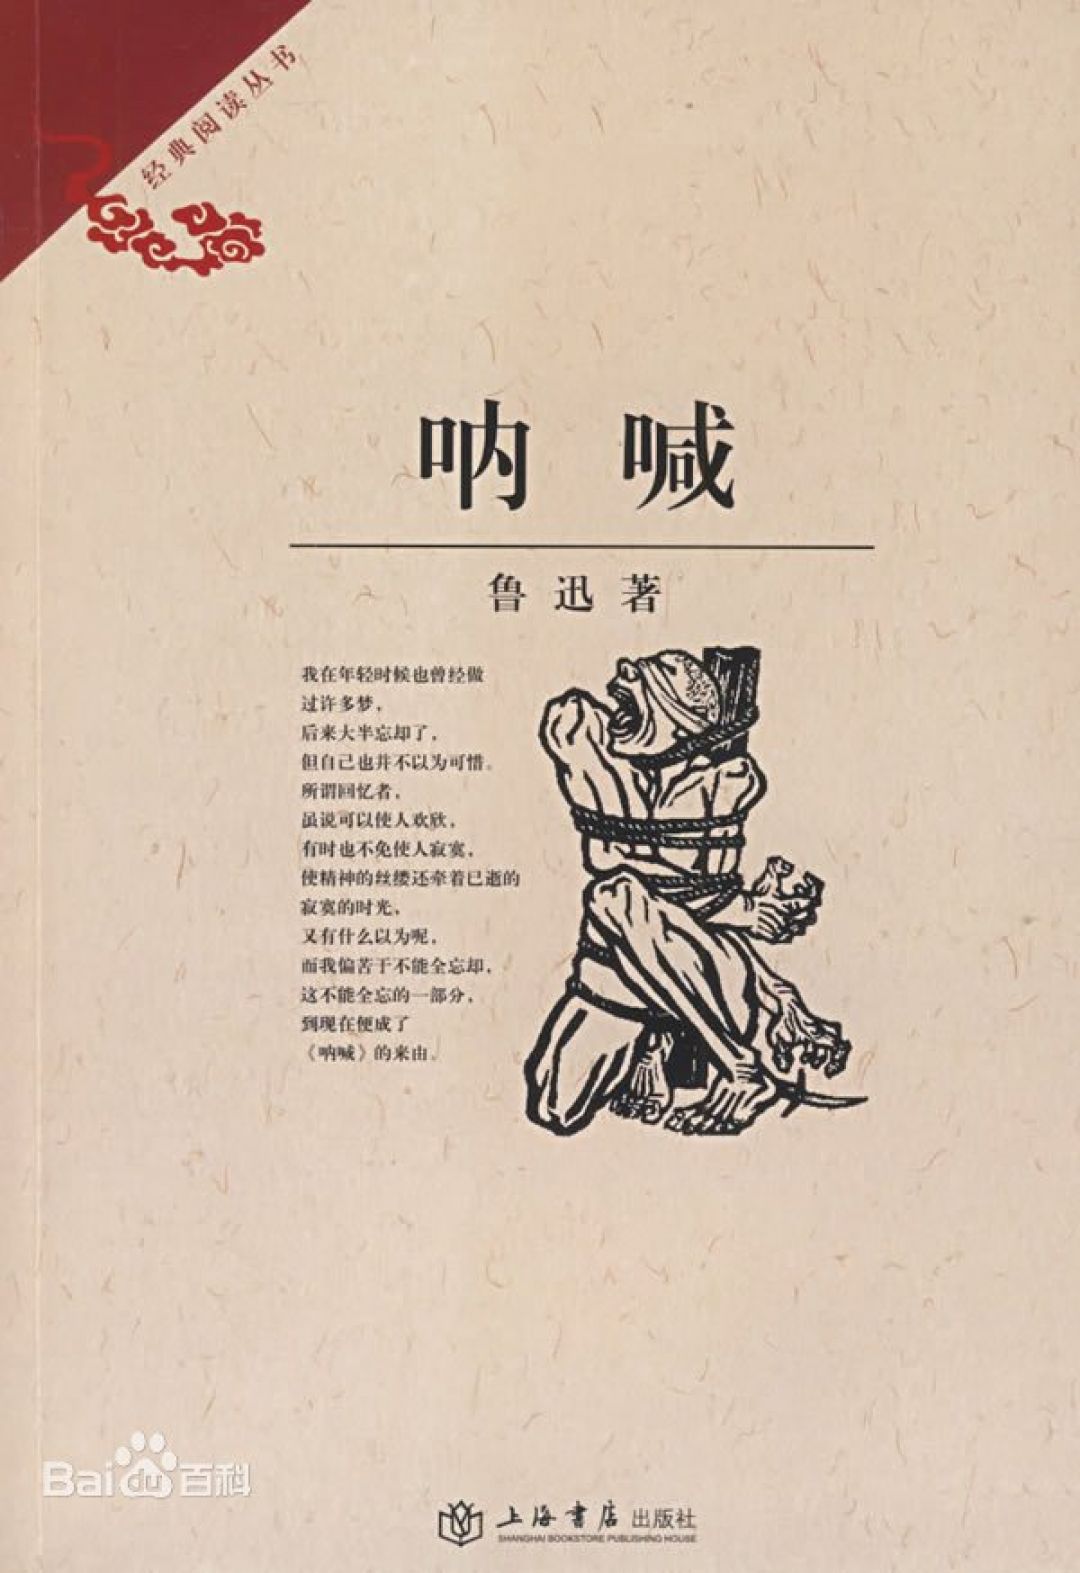 SEJARAH: 1923 Lu Xun Menerbitkan Koleksi Novel 